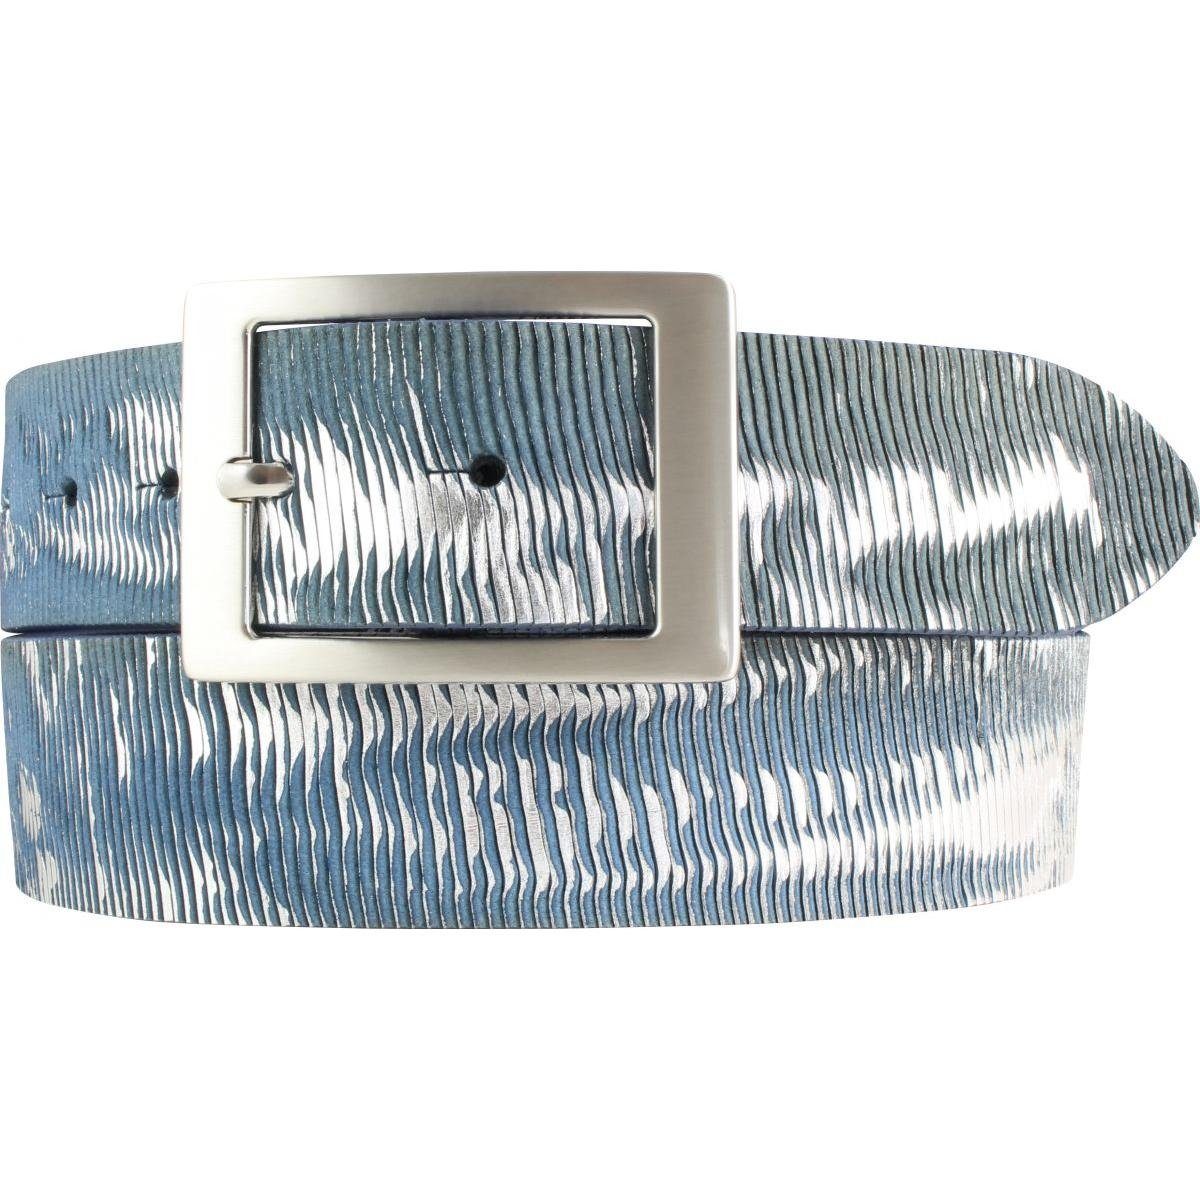 Silber Vollrindleder Blau, Herren-Gürtel Ledergürtel Doppel-Schließe aus cm 4 BELTINGER Metall-Optik mit